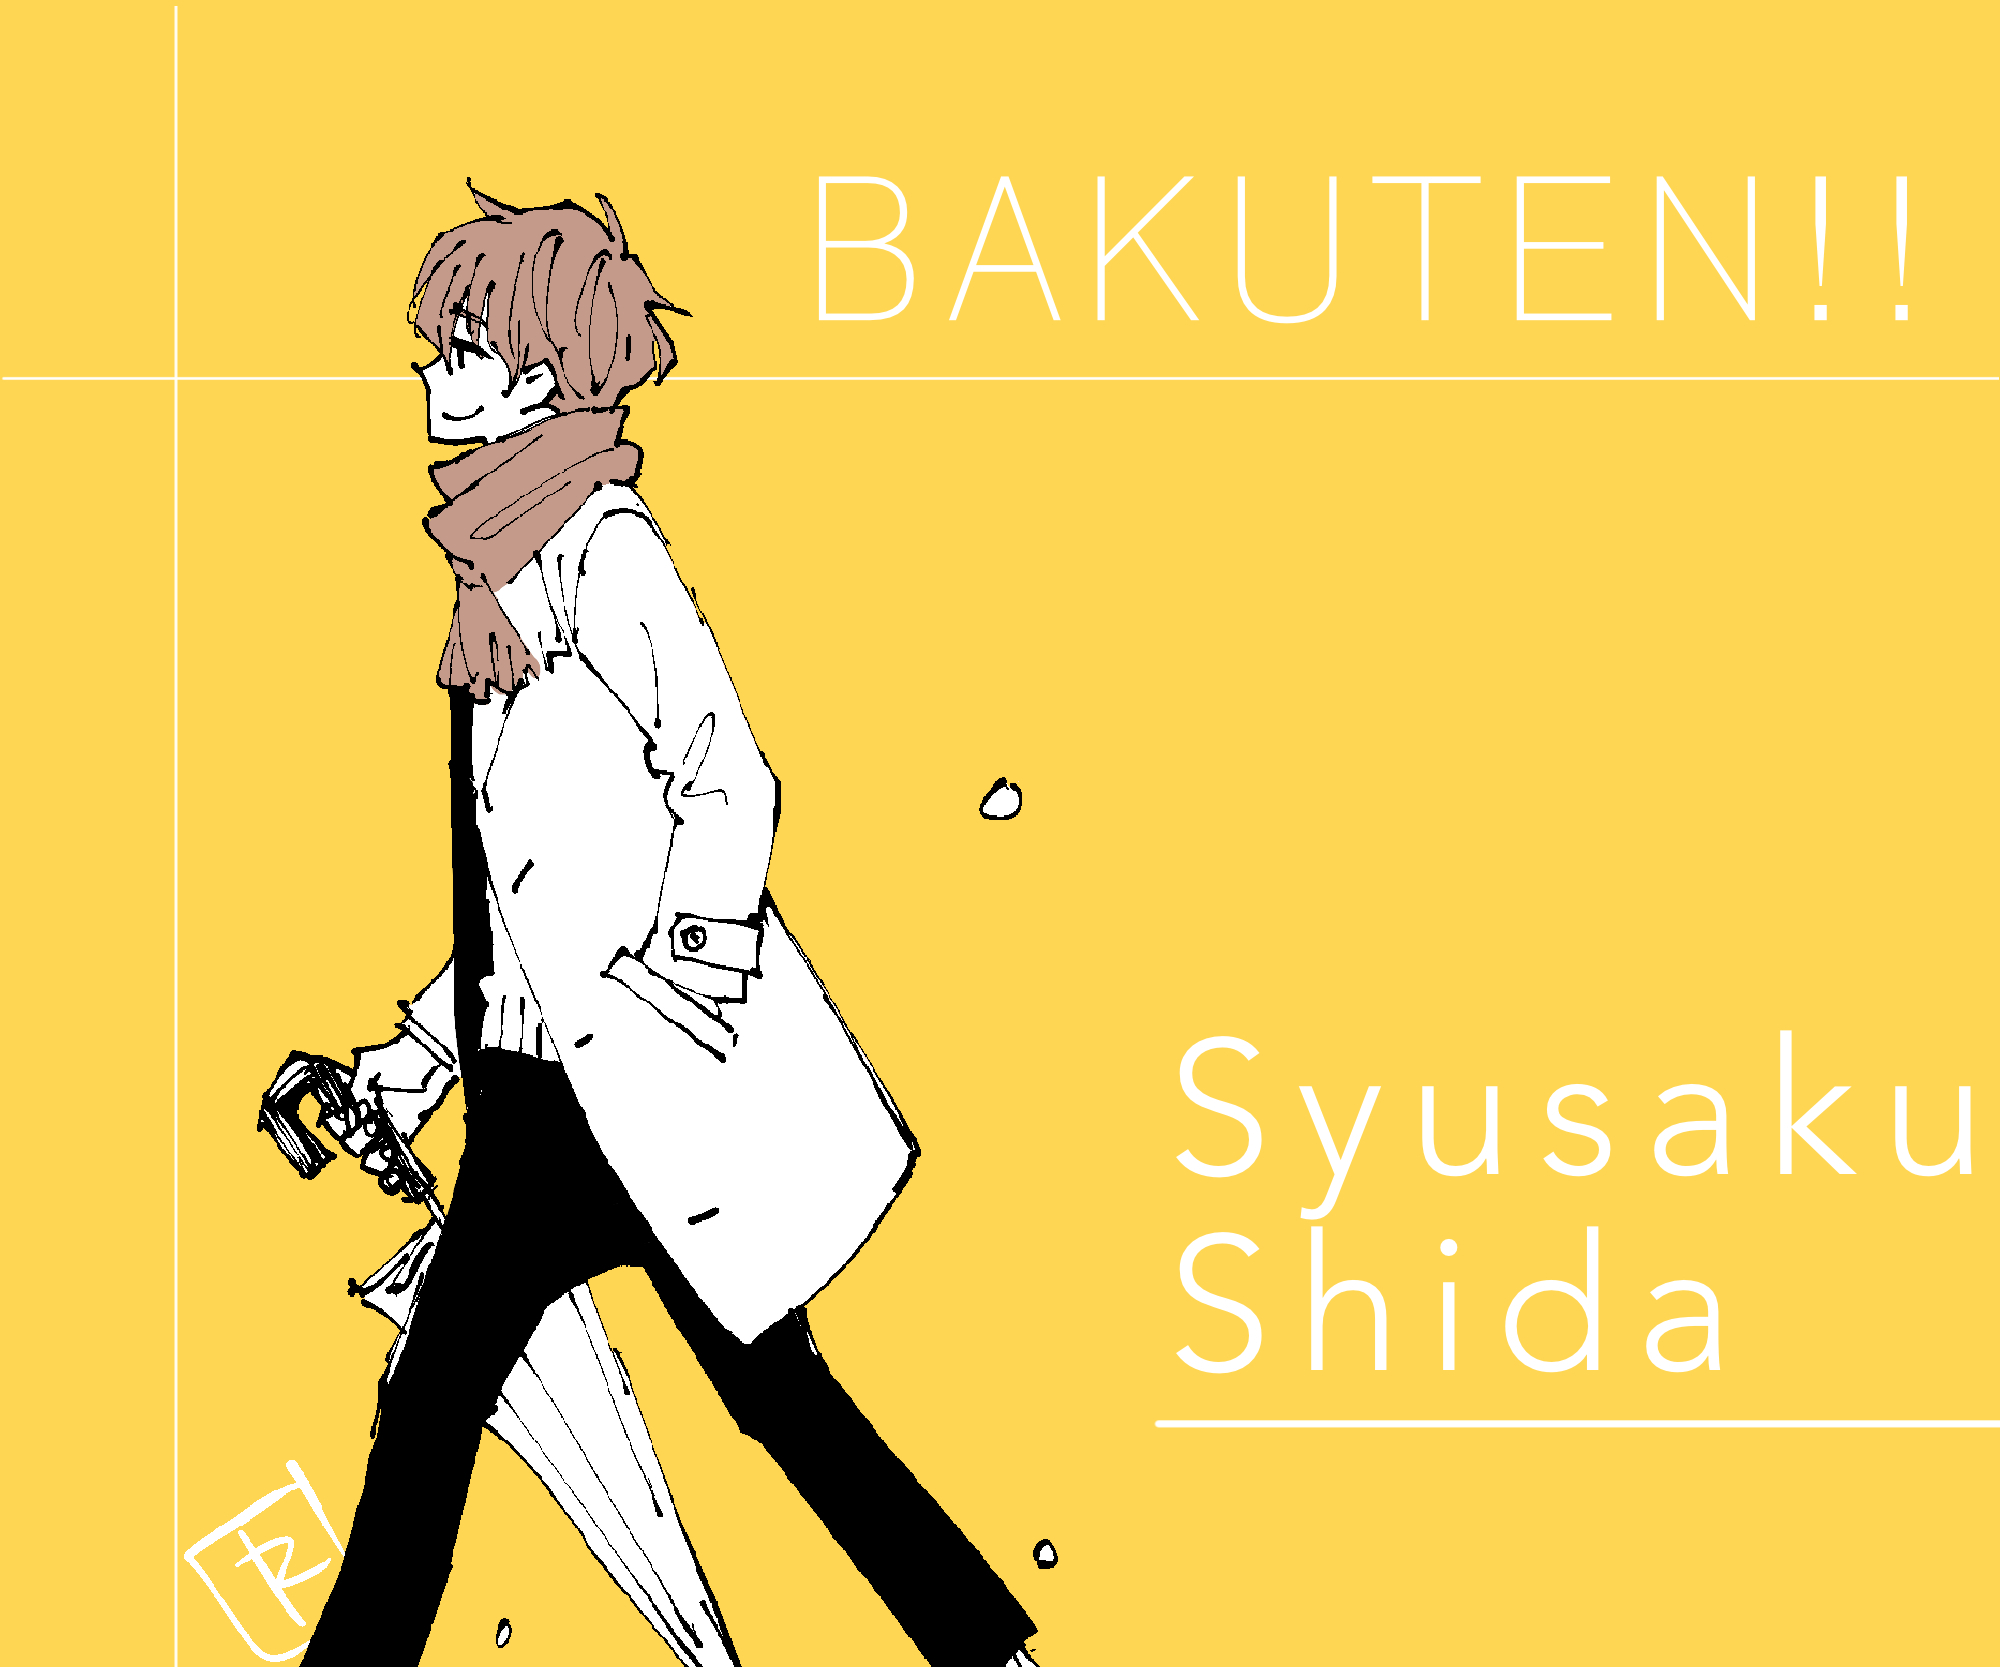 1071982 descargar imagen animado, bakuten!, shusaku shida: fondos de pantalla y protectores de pantalla gratis